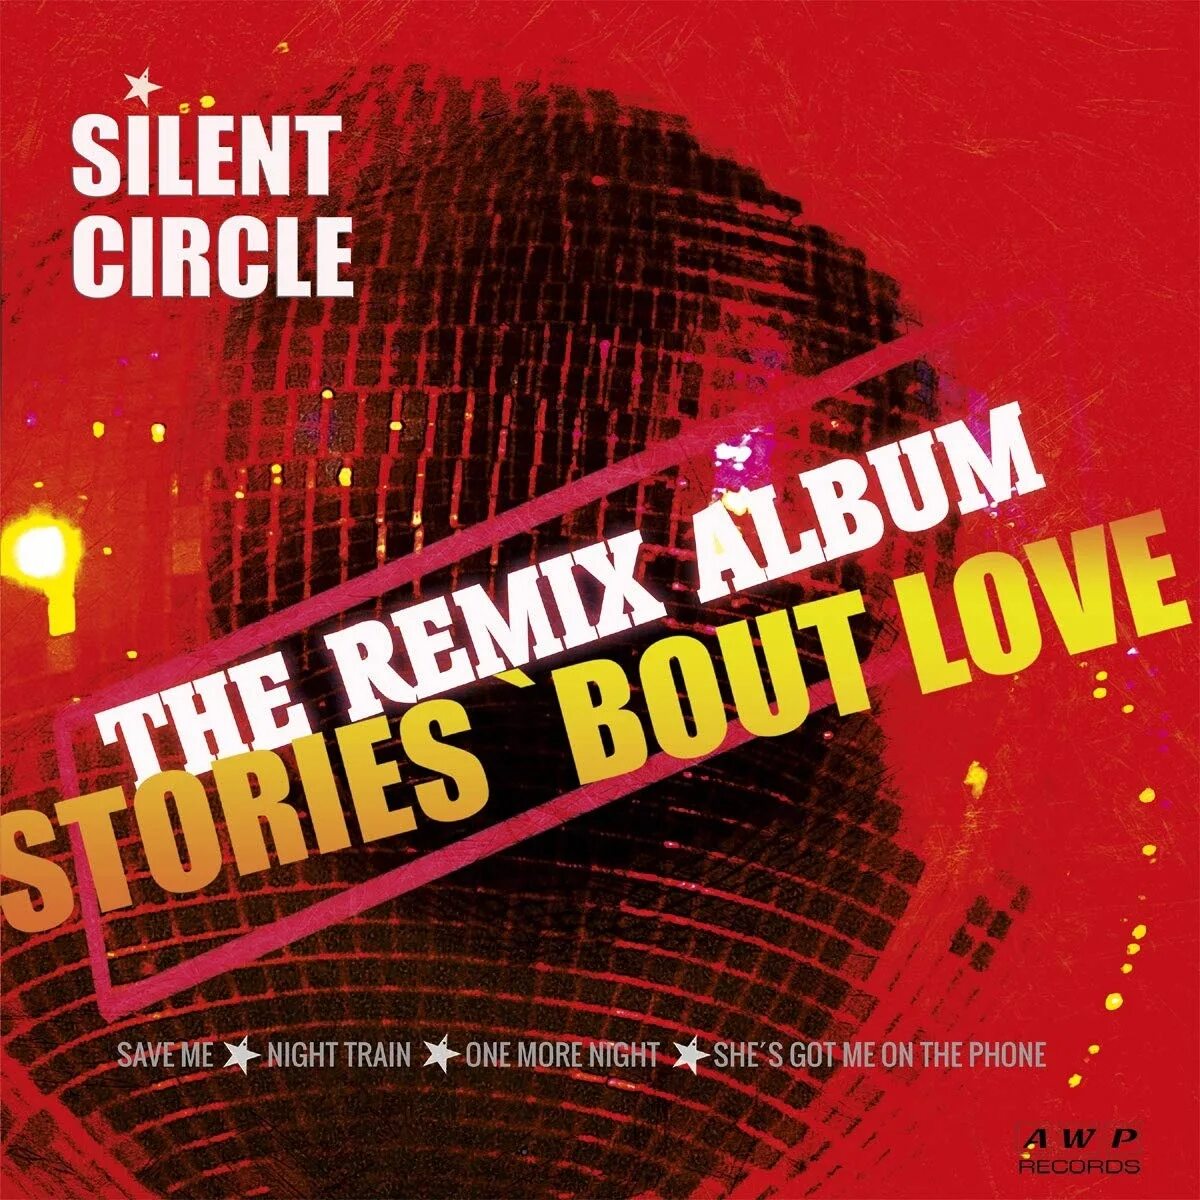 Стоп ночь ремикс. Silent circle 1986. Виниловые пластинки сайлент Серкл. Silent circle stories 'bout Love. Silent circle обложка.